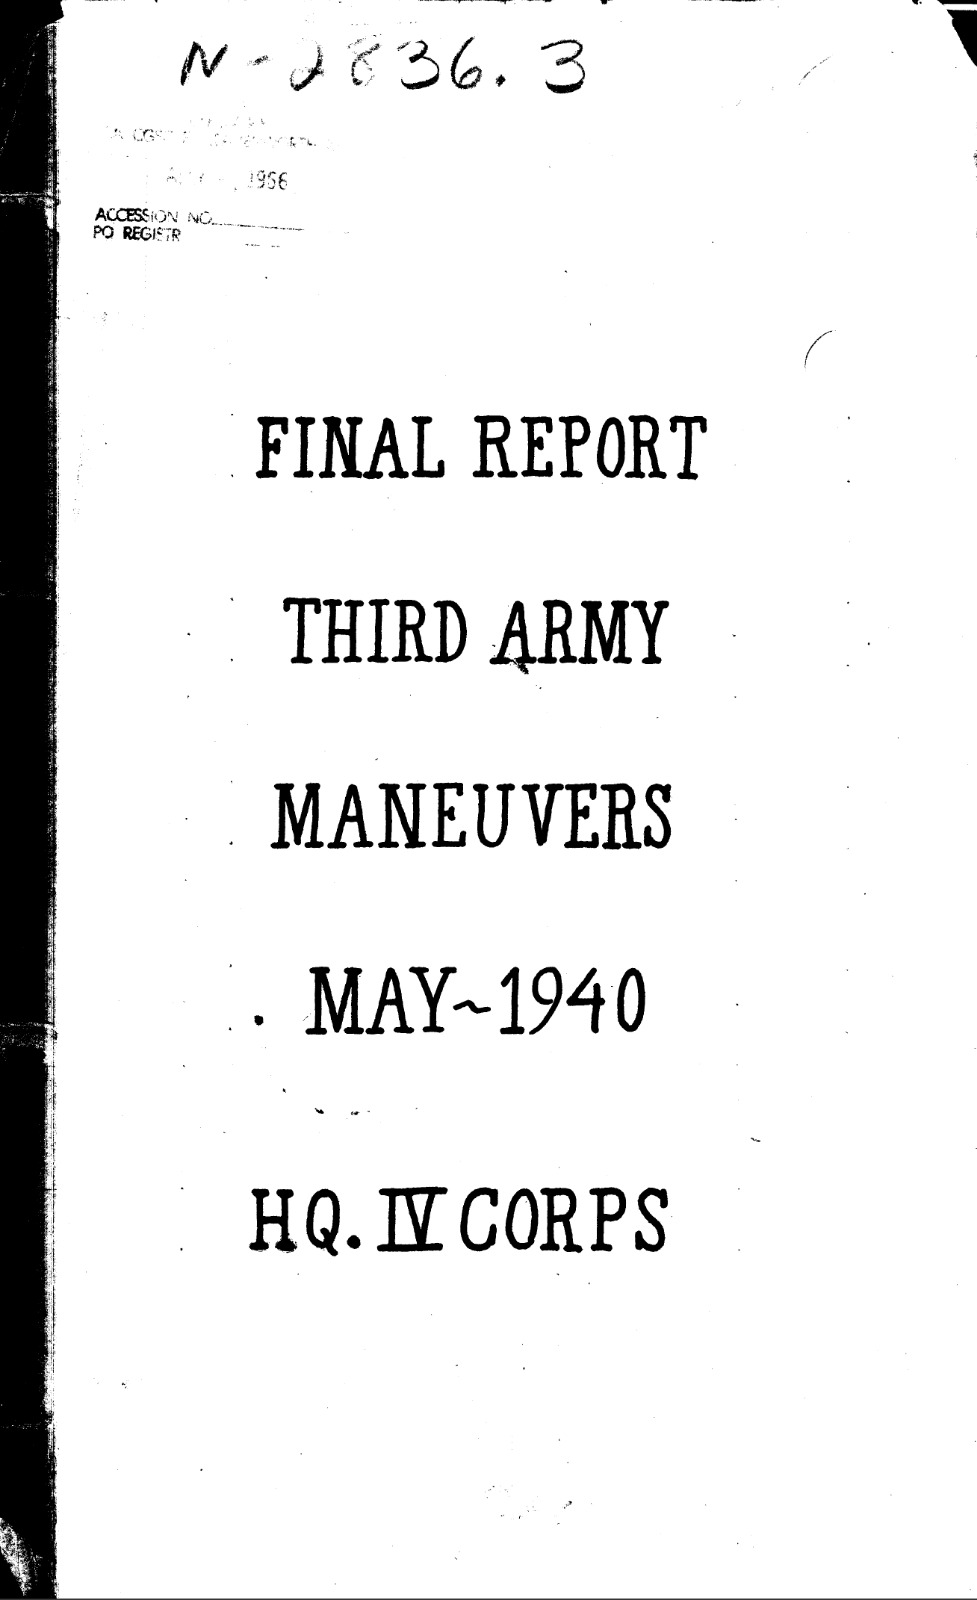 61 Page Third Army Maneuvers 1940 Sabine Louisiana IV Corps History on Data CD